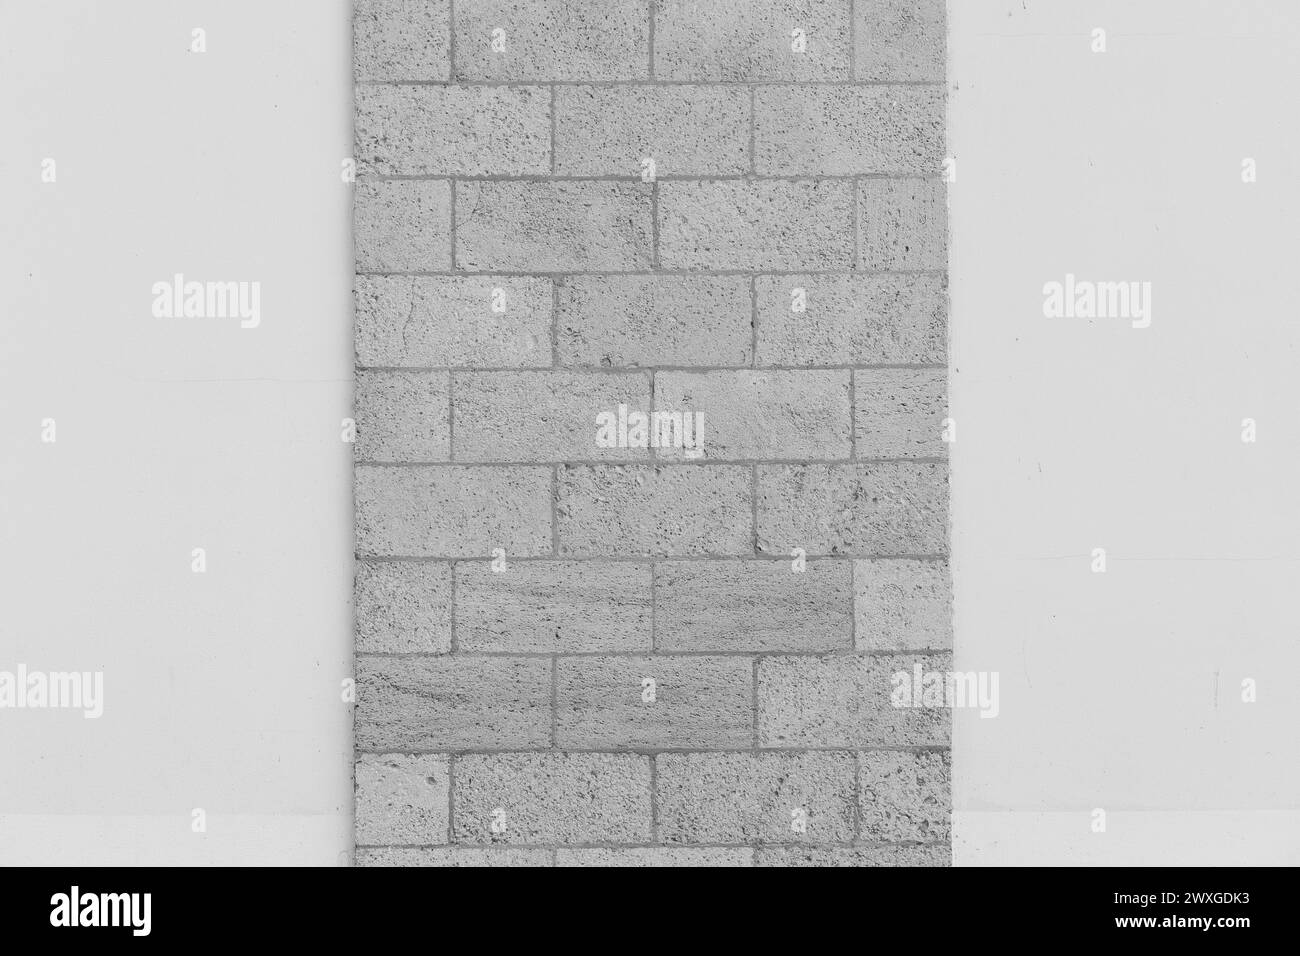 Grey sand brickwork brick masonry wall sample object on white background architecture facade exterior building background. Stock Photo